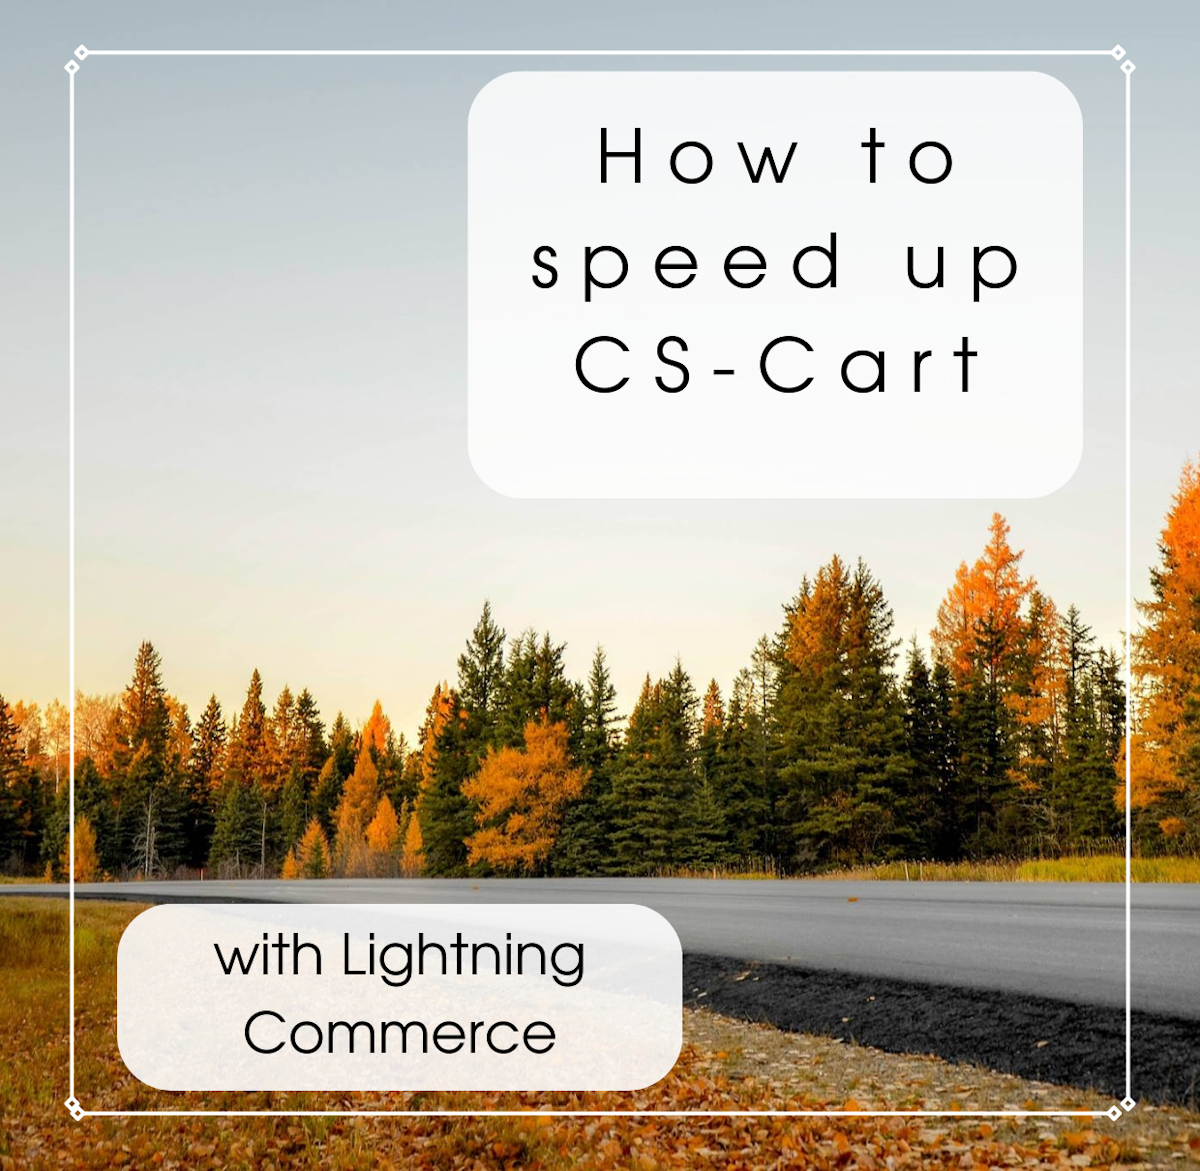 How to speed up CS-Cart